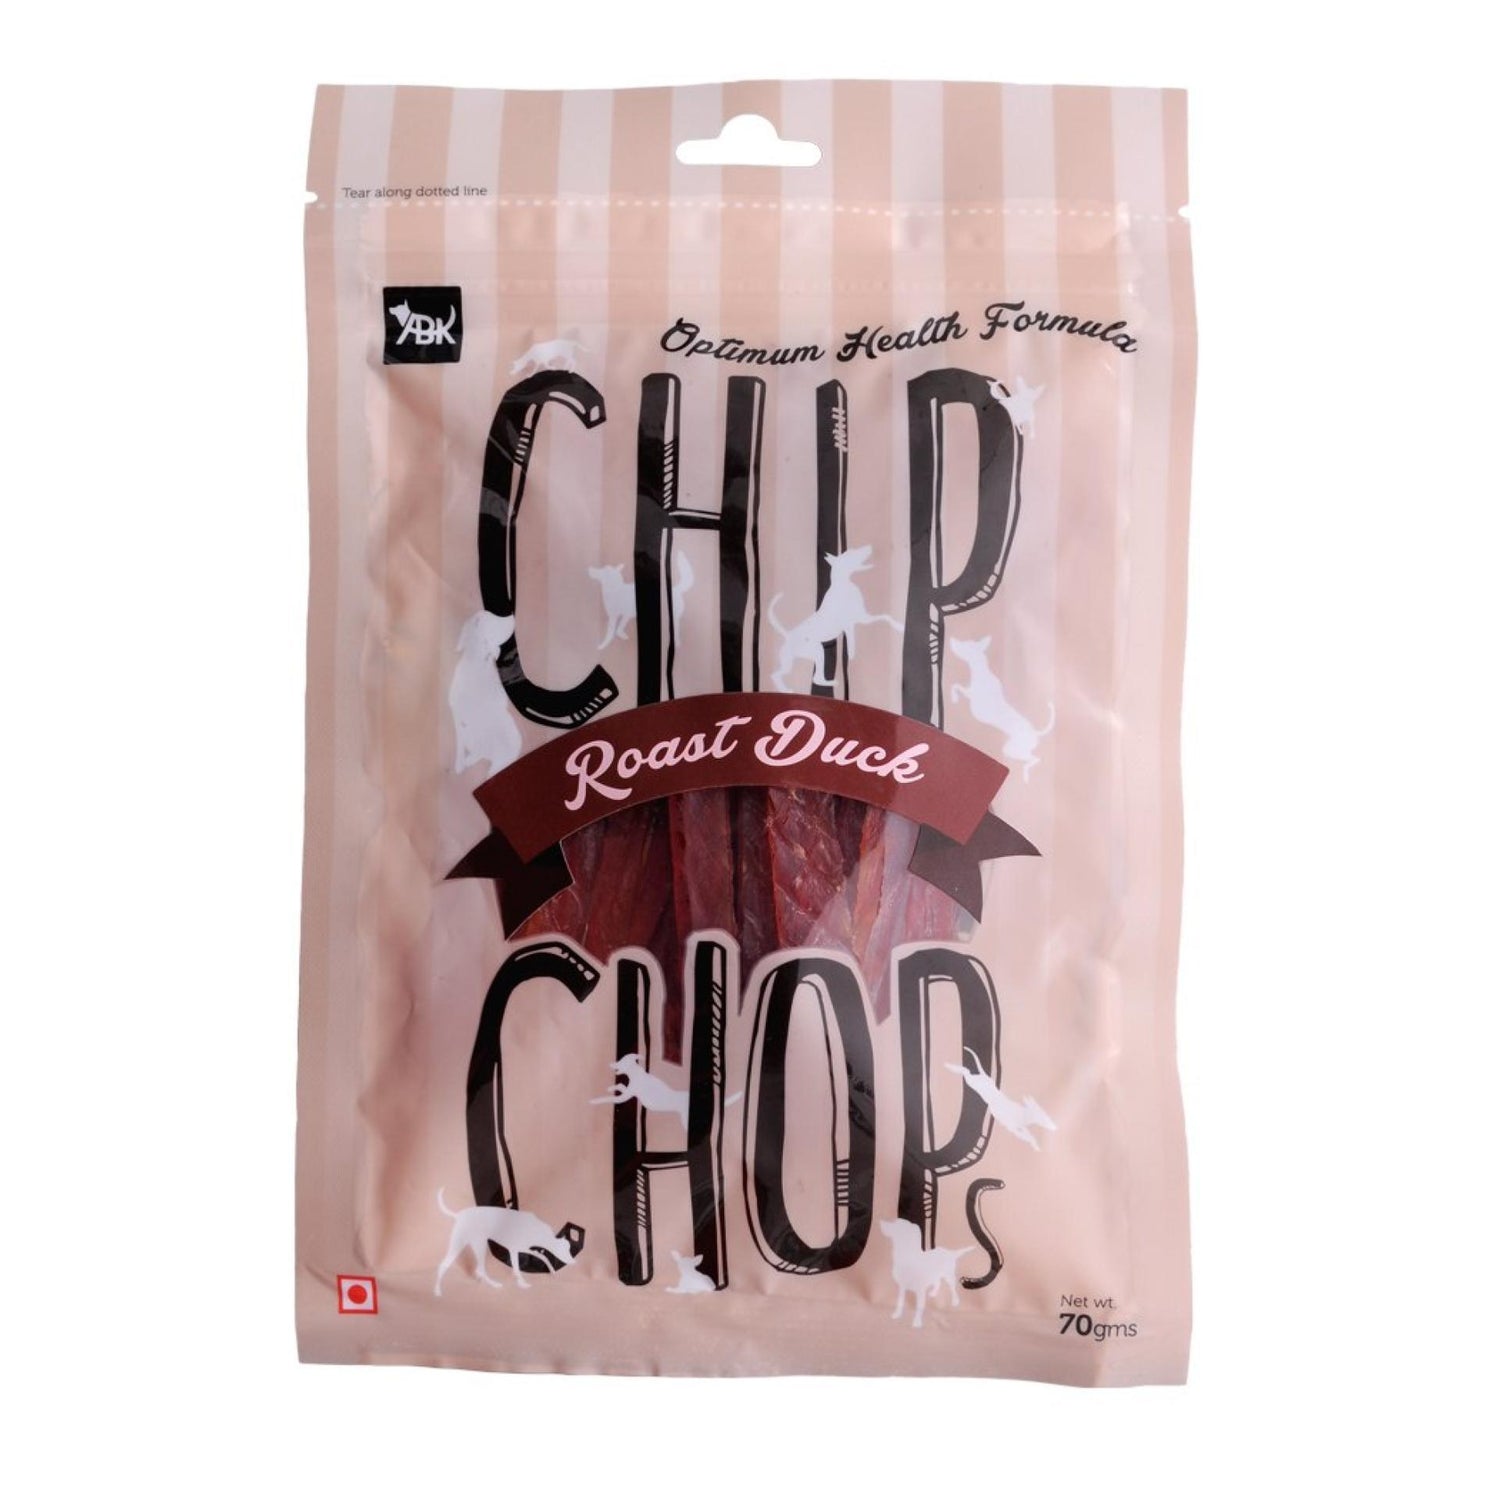 Chip Chops Roast Duck Slice Dog Chew Treats x2Nos